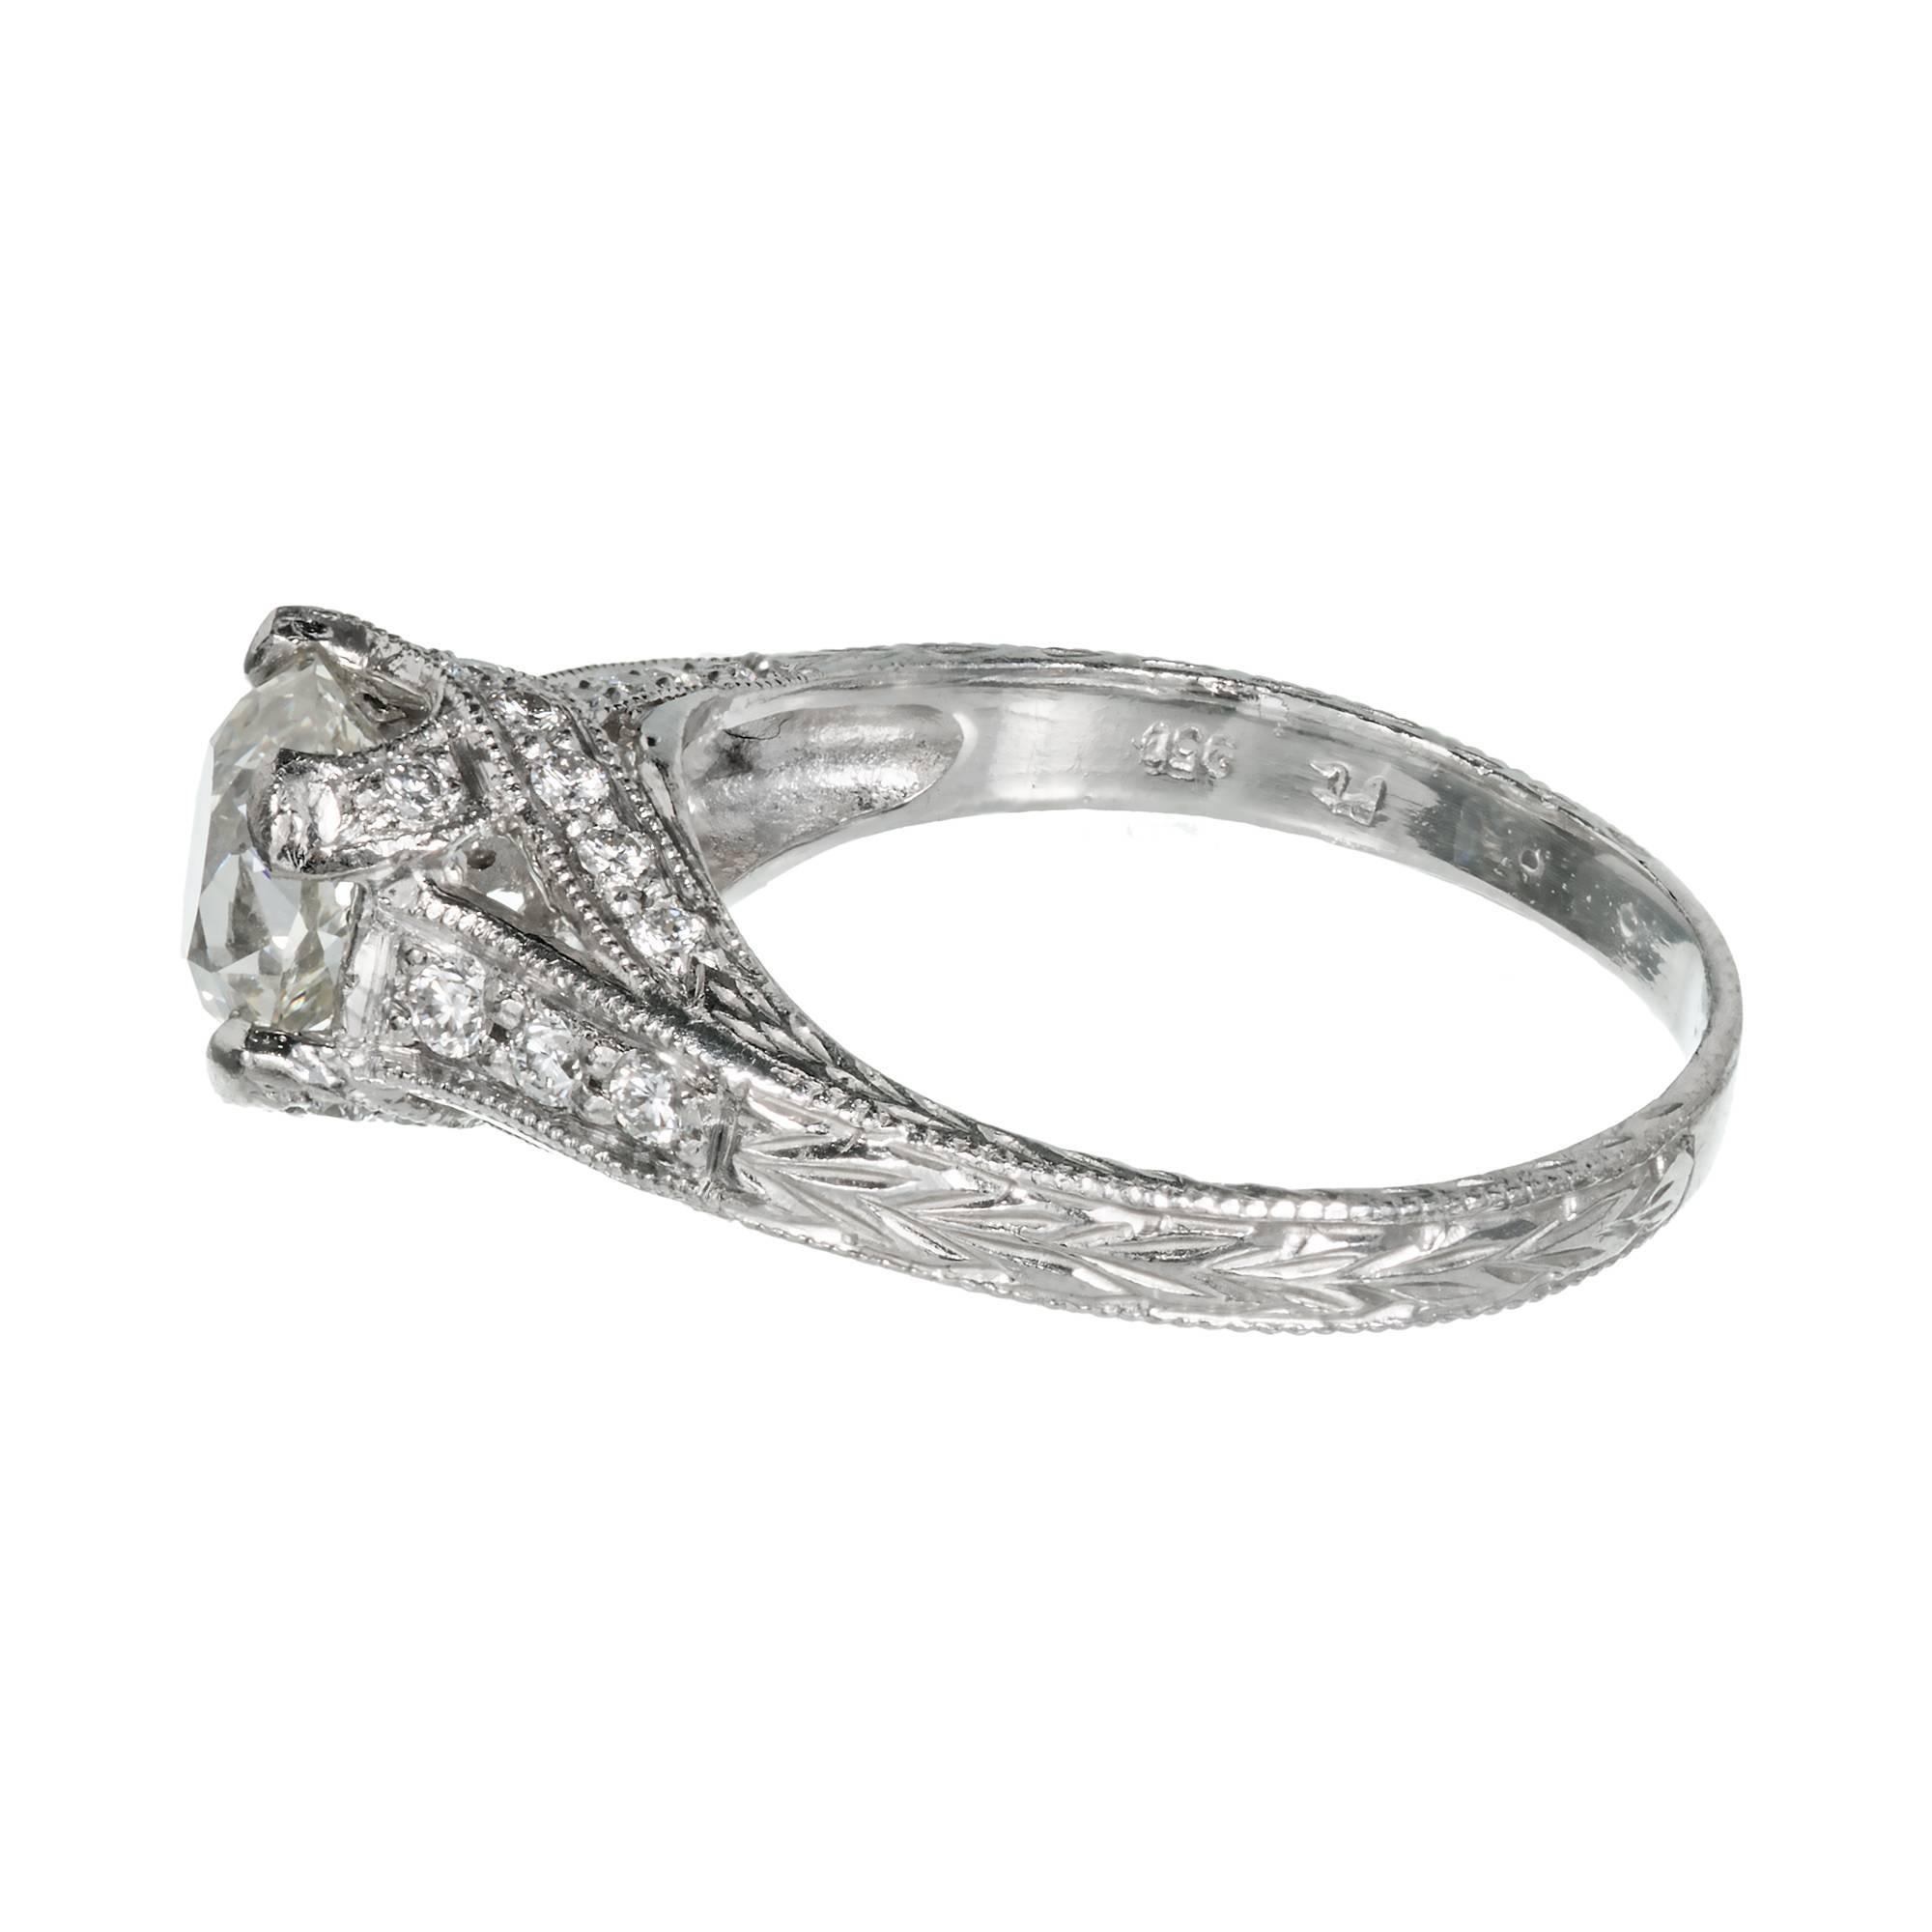 1.34 carat diamond ring